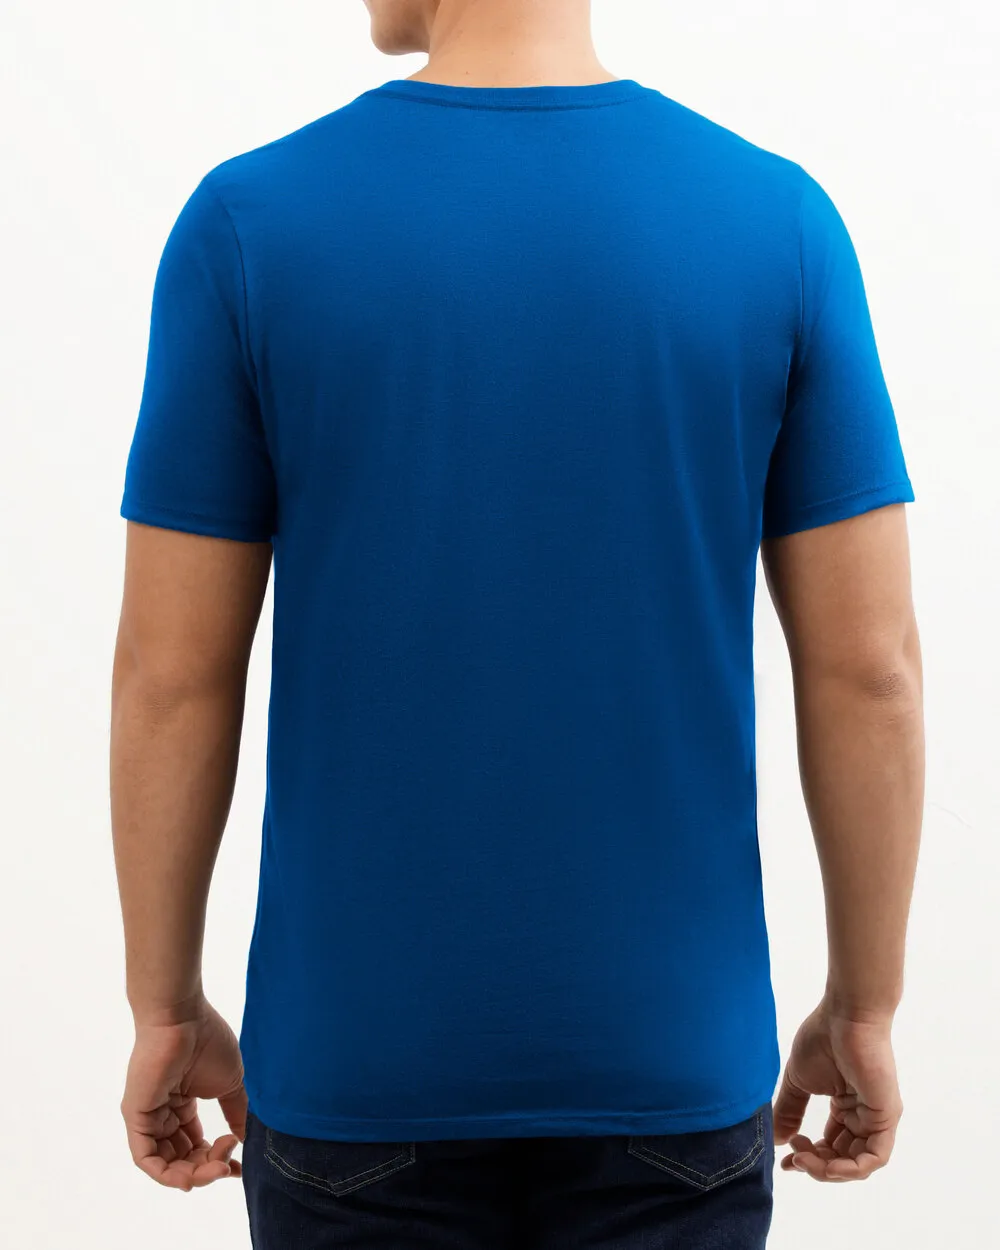 Camiseta cuello v lisa manga corta azul